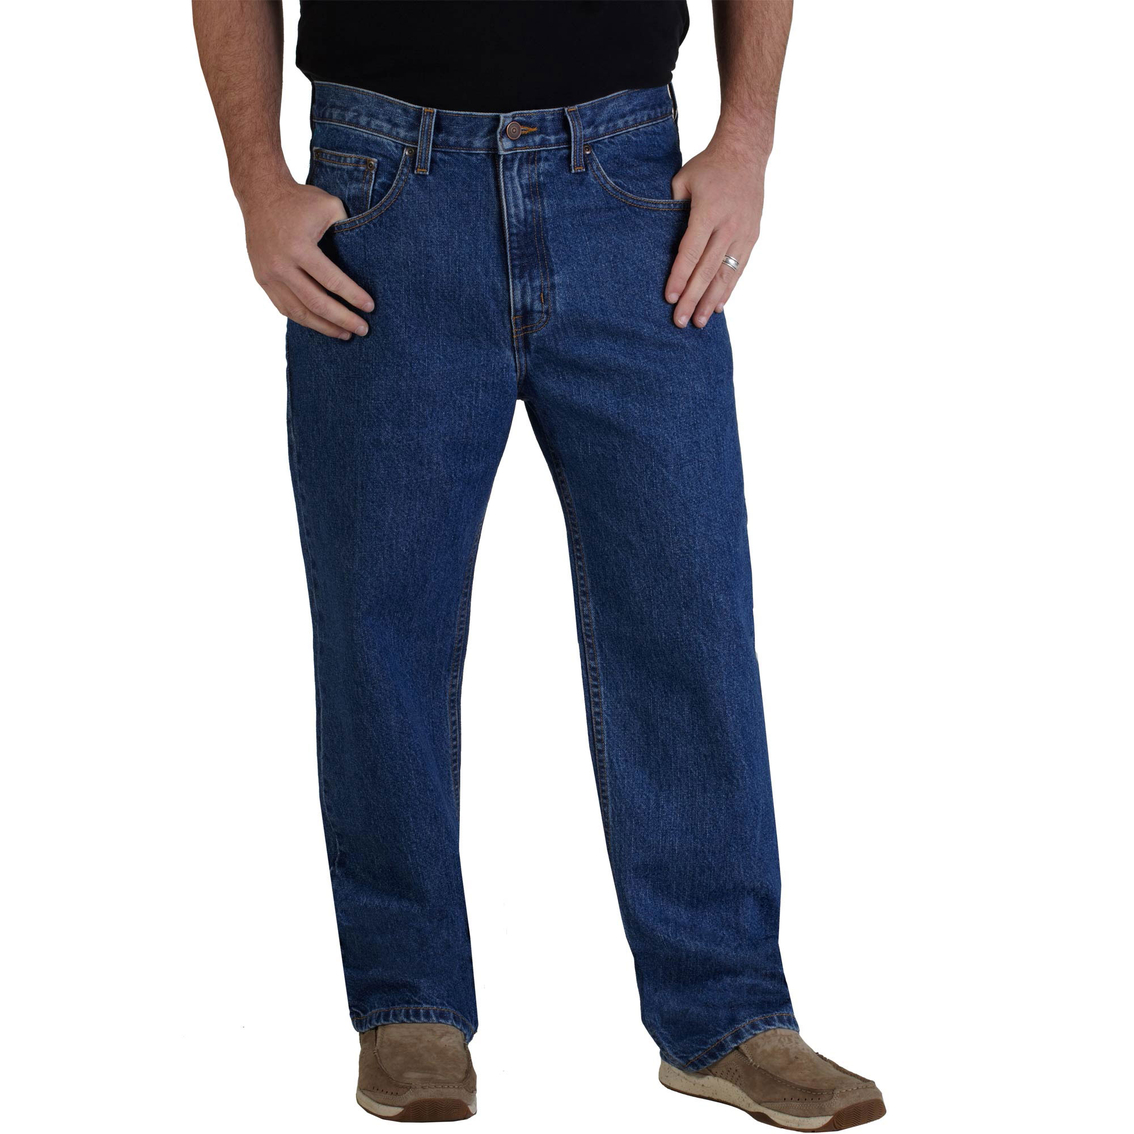 Pbx 5 Pocket Classic Fit Jeans | Jeans | Clothing & Accessories | Shop ...